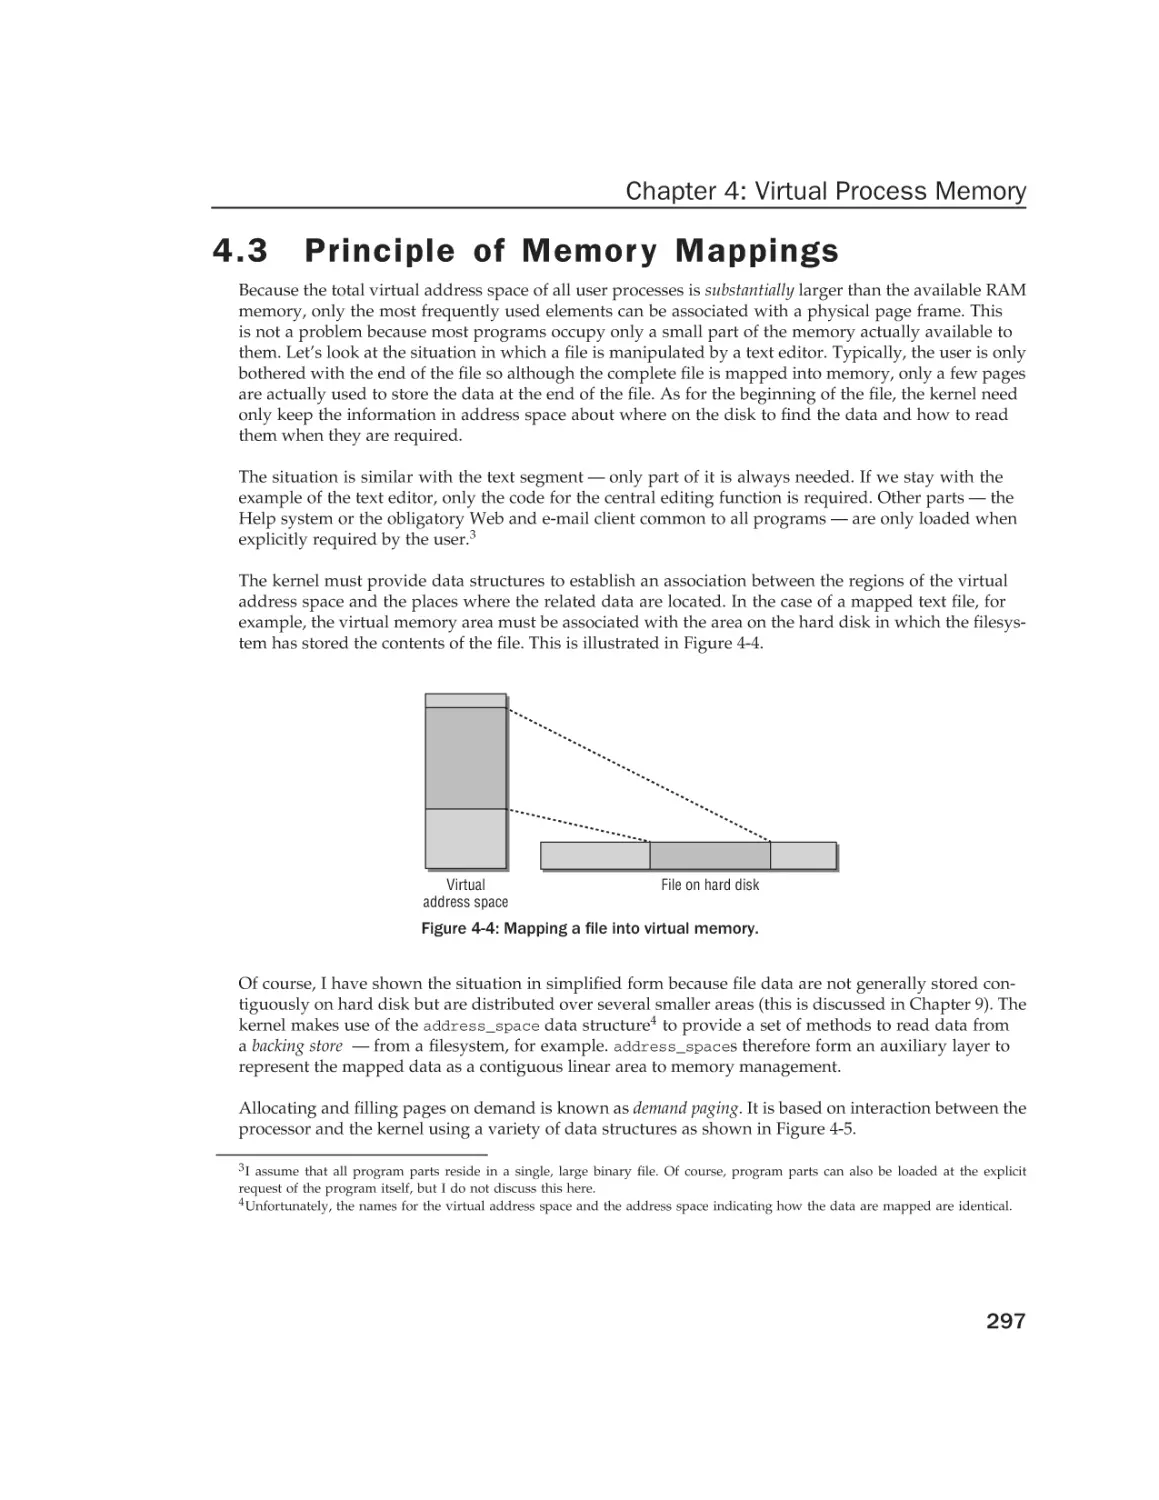 4.3 Principle of Memory Mappings